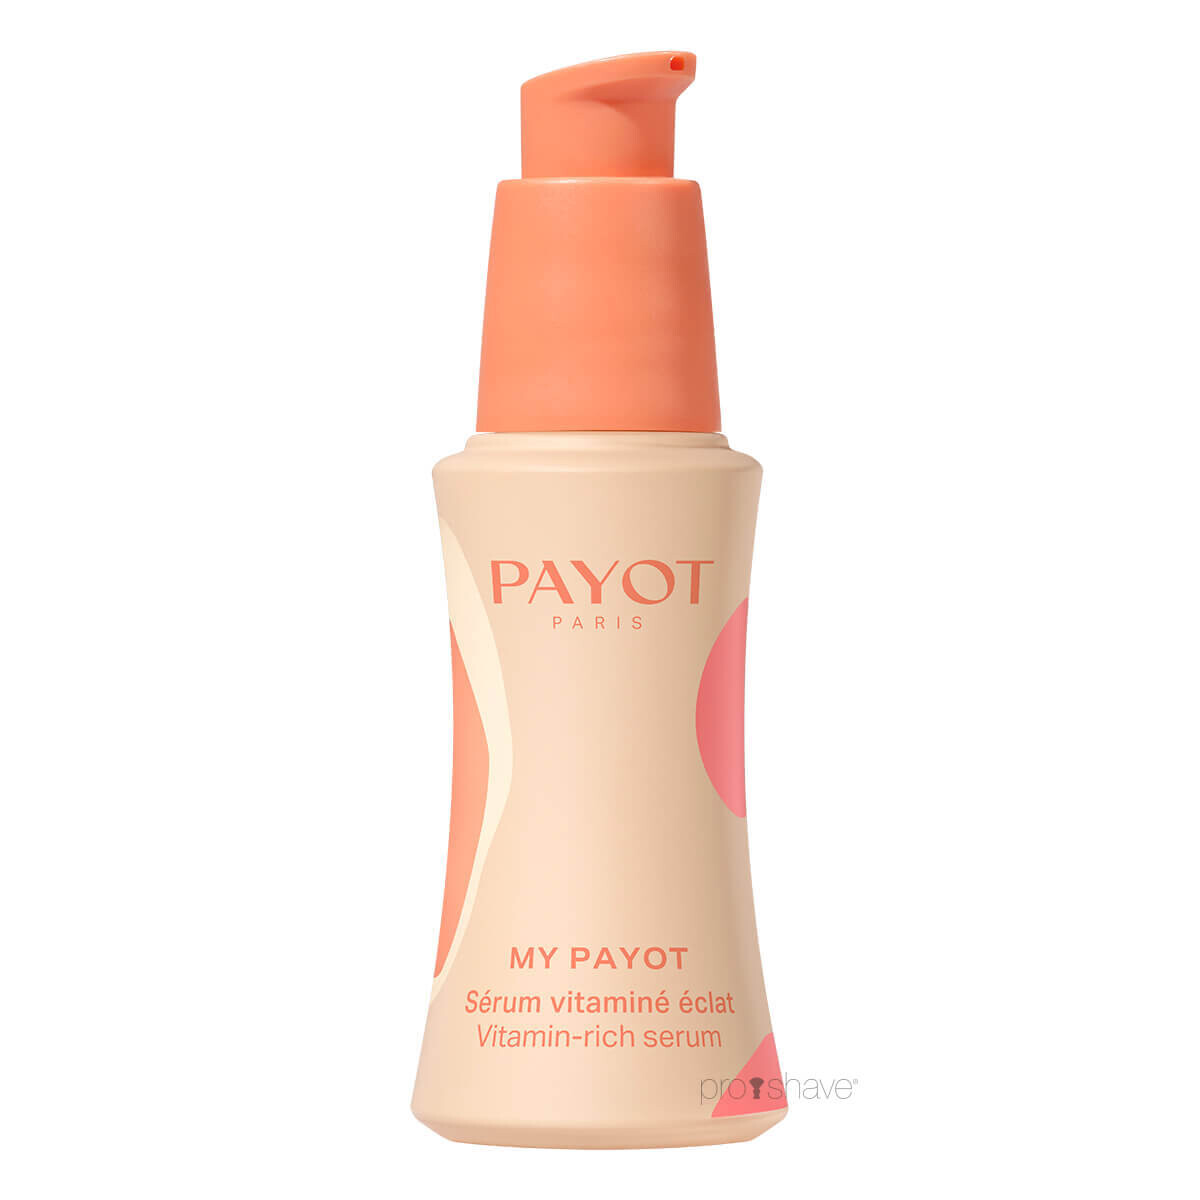 Se Payot My Payot Vitamin-rich Serum, 30 ml. hos Proshave